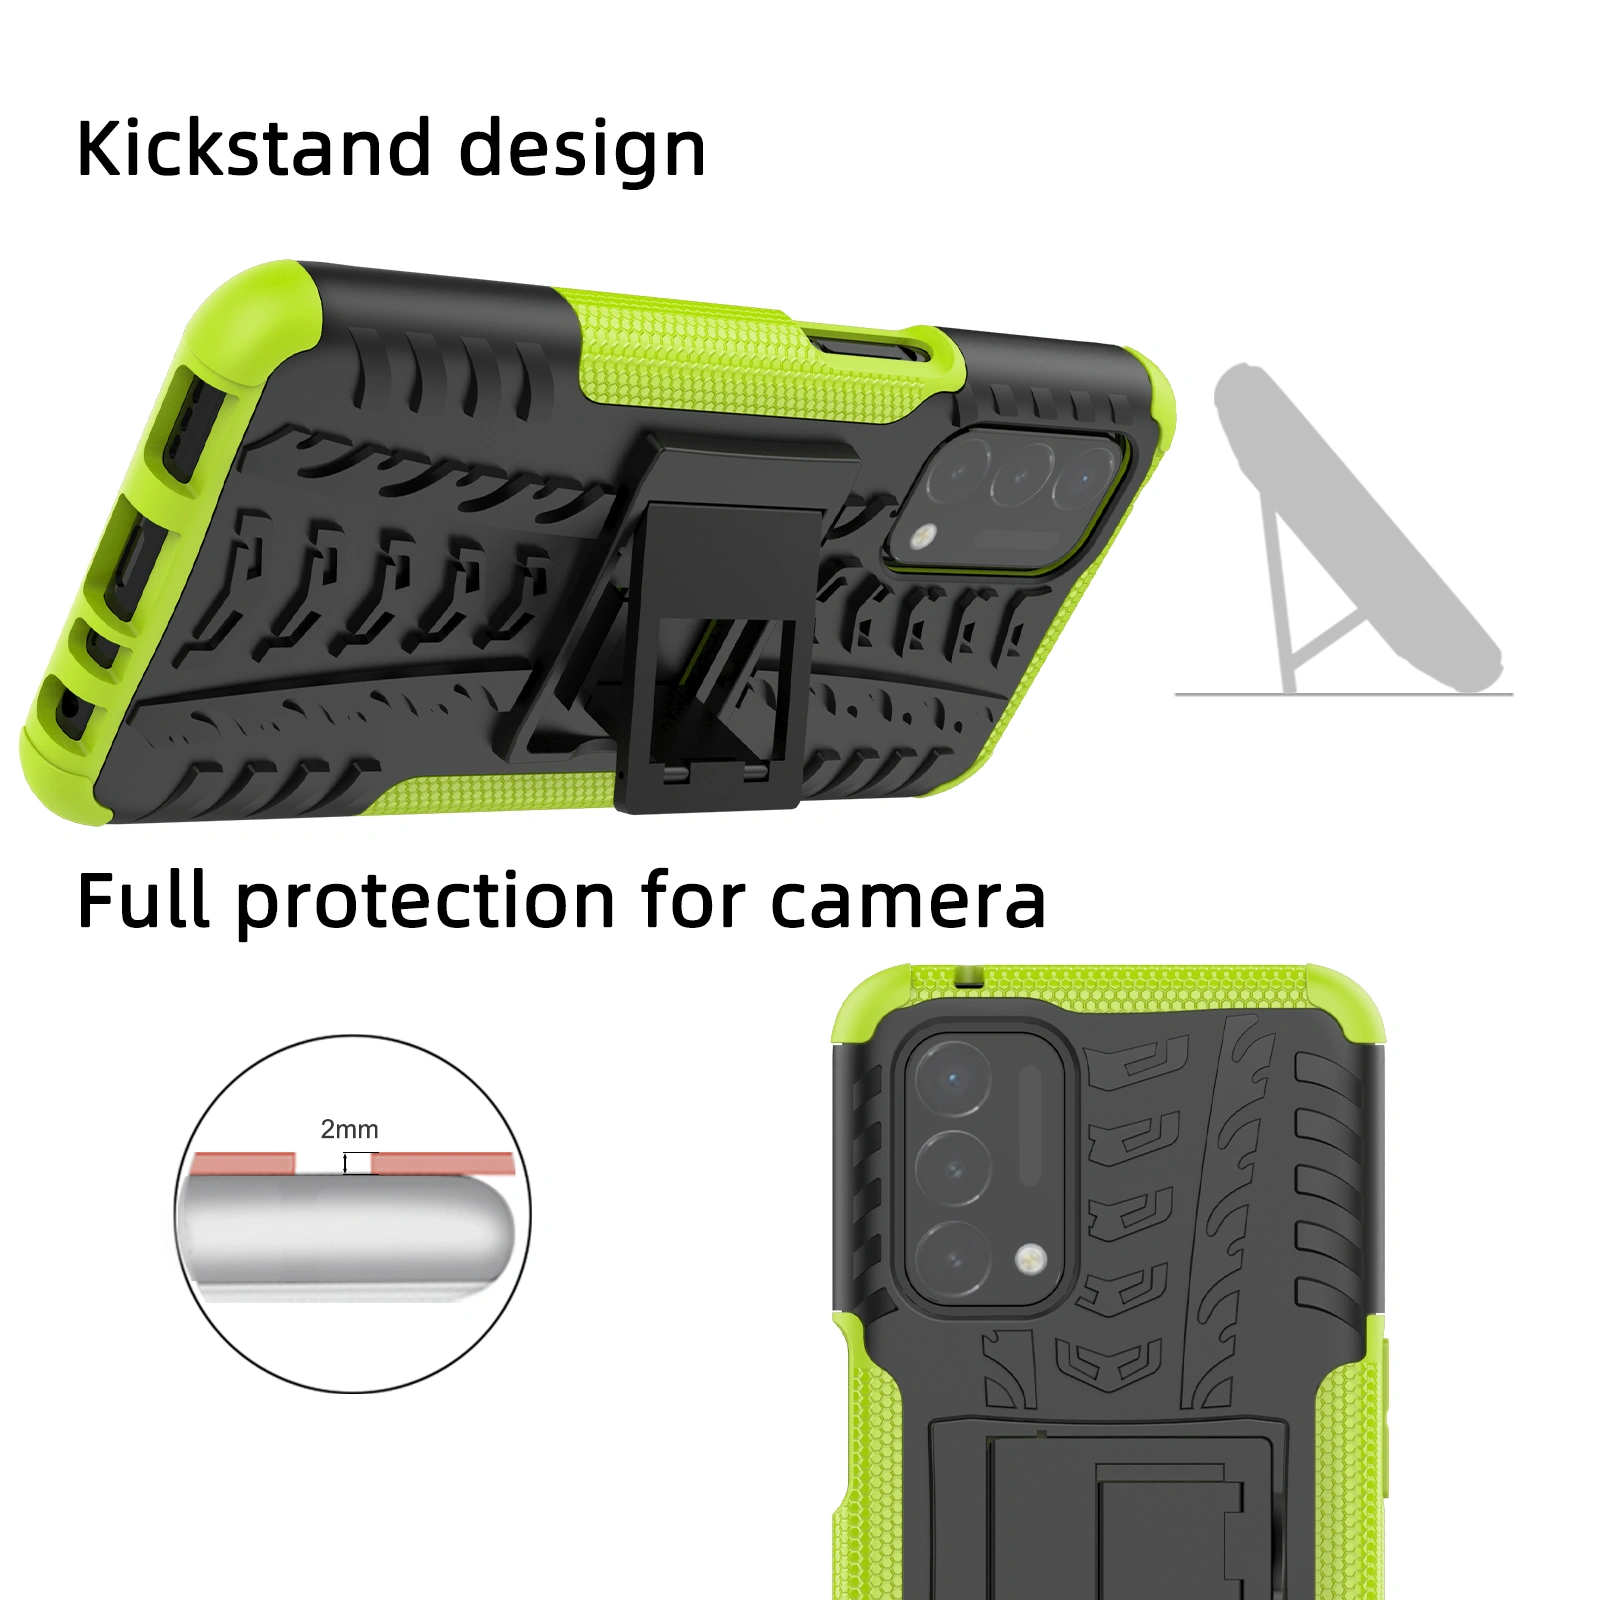 kickstand design,full protection for camera